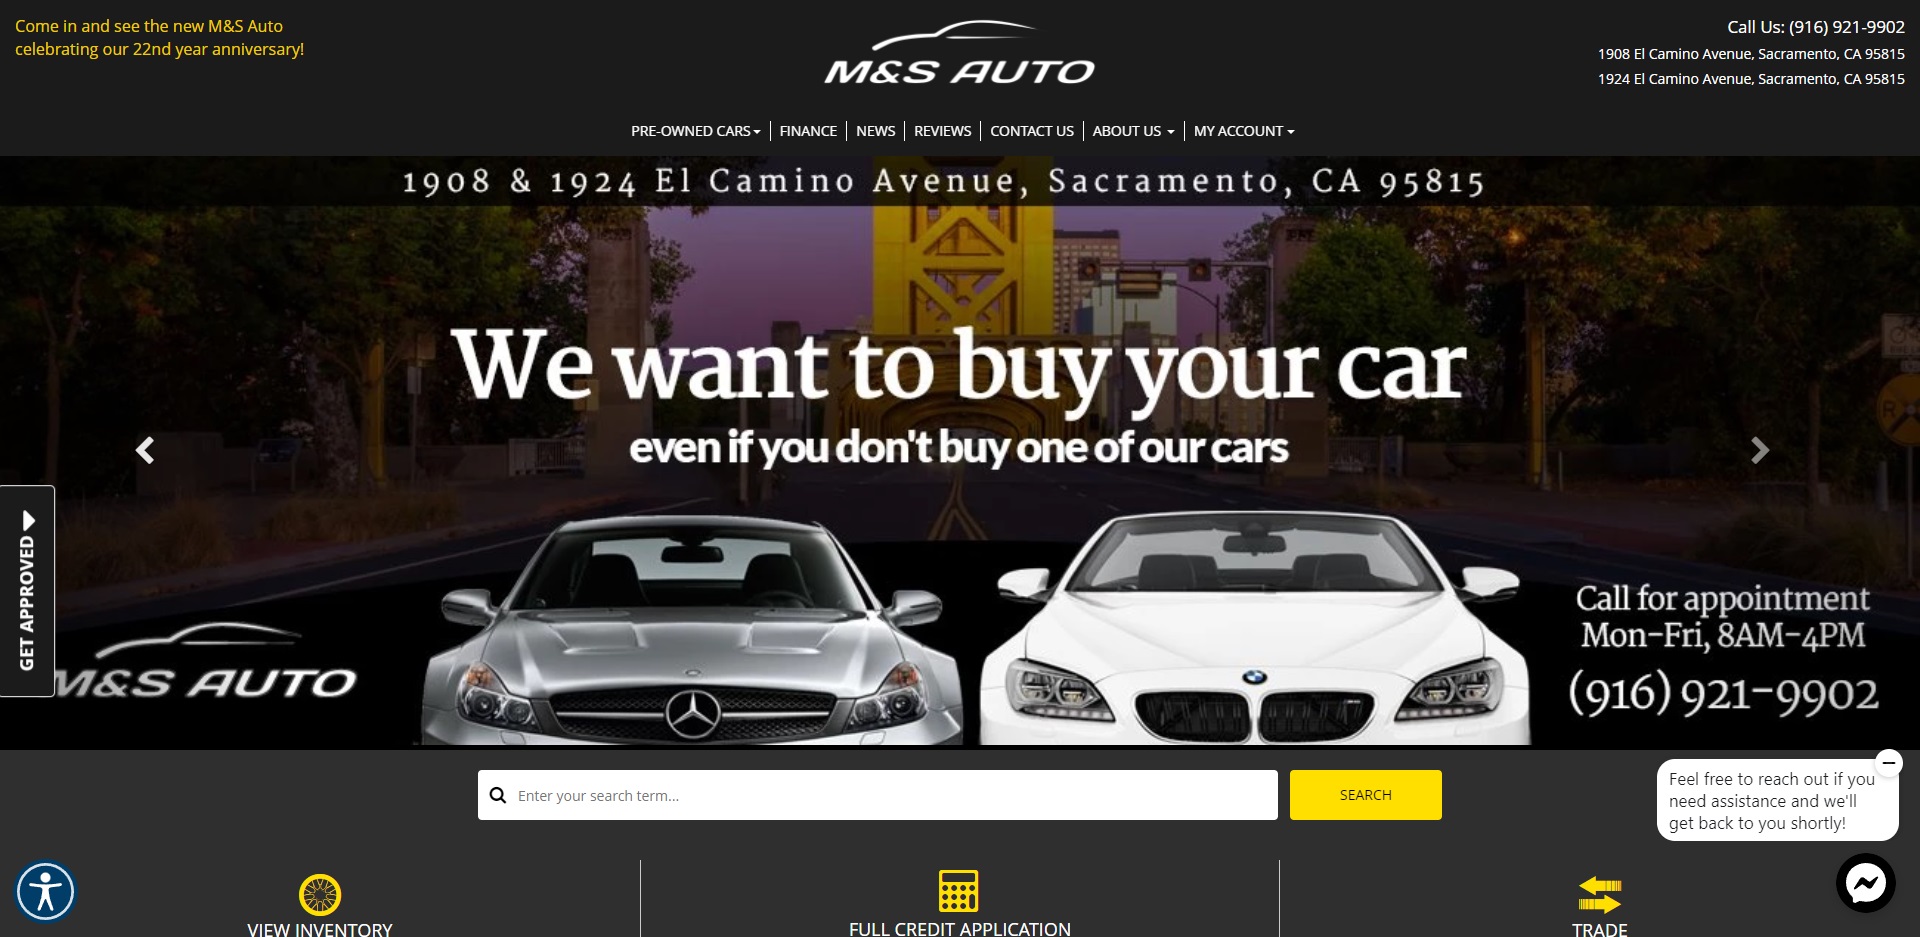 The best Mercedes dealers in Sacramento, CA